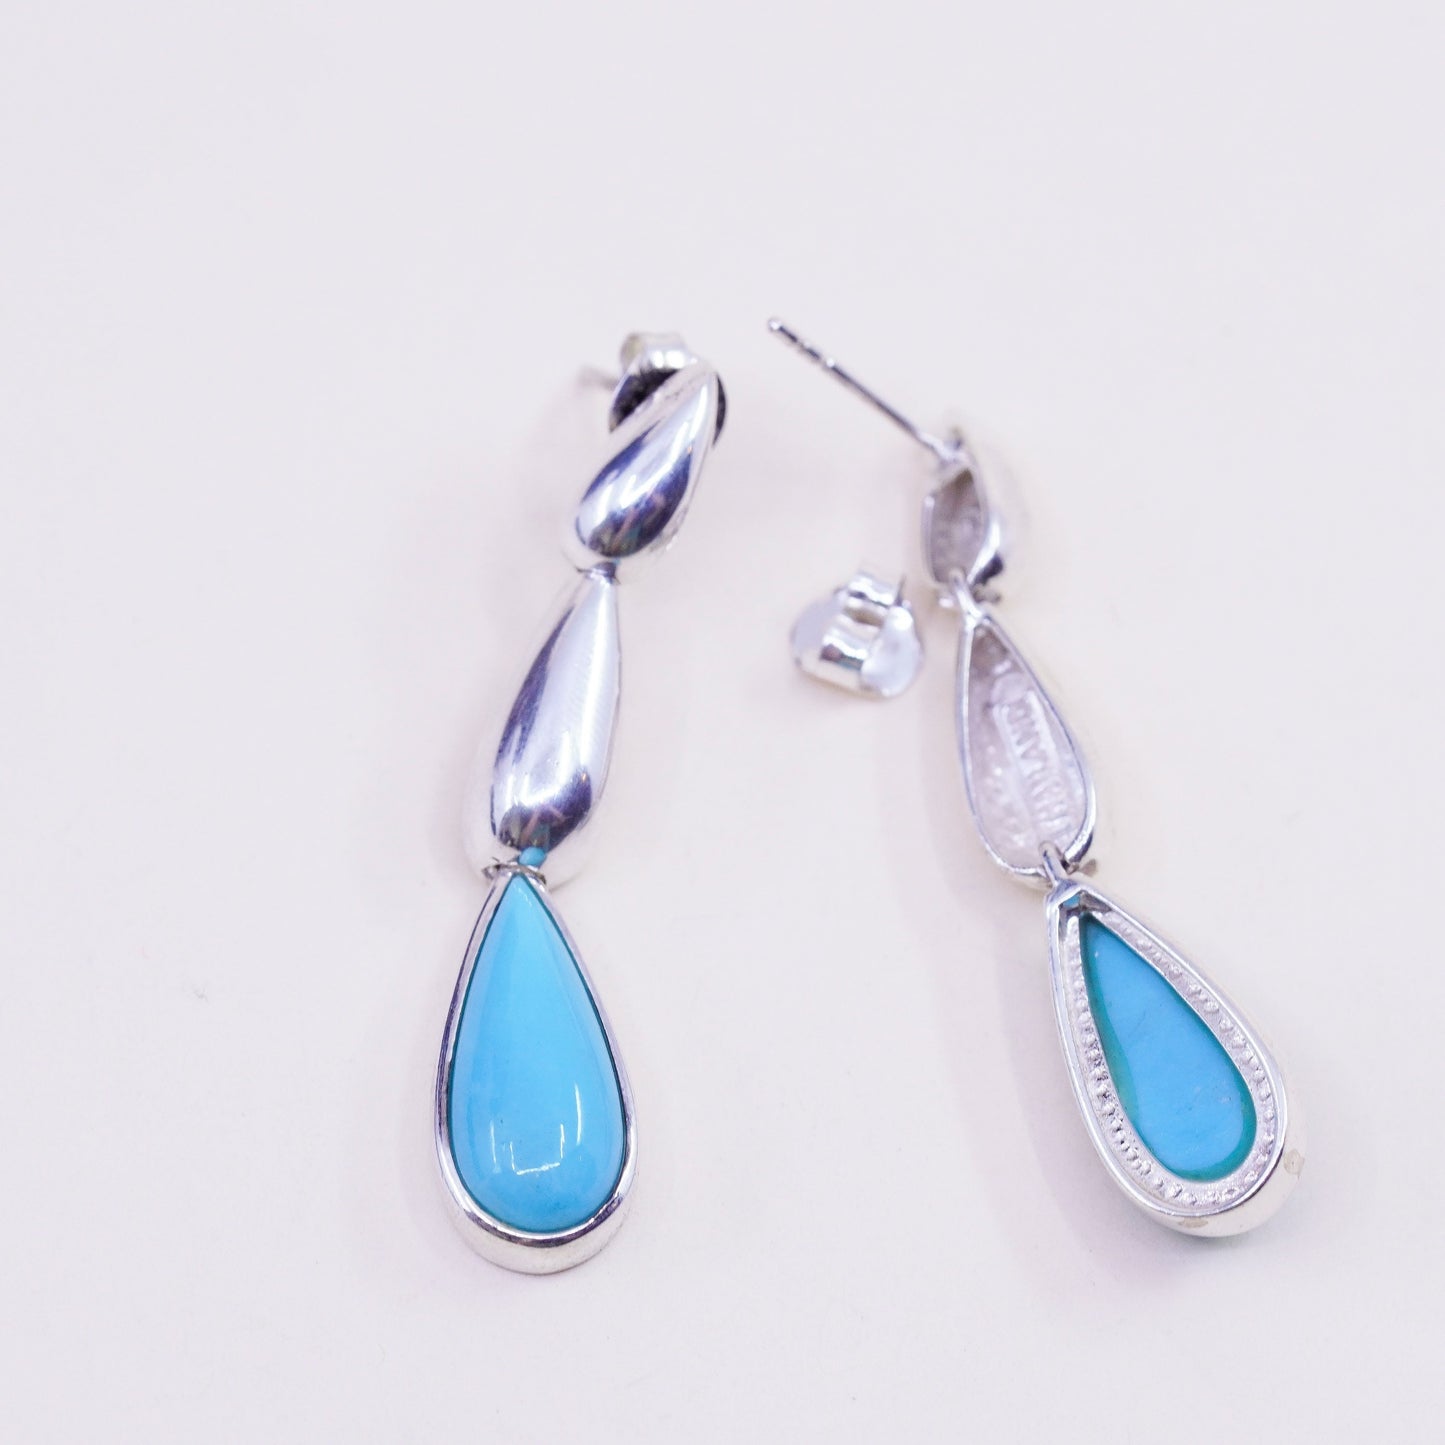 Vintage sterling 925 silver handmade teardrop earrings with turquoise